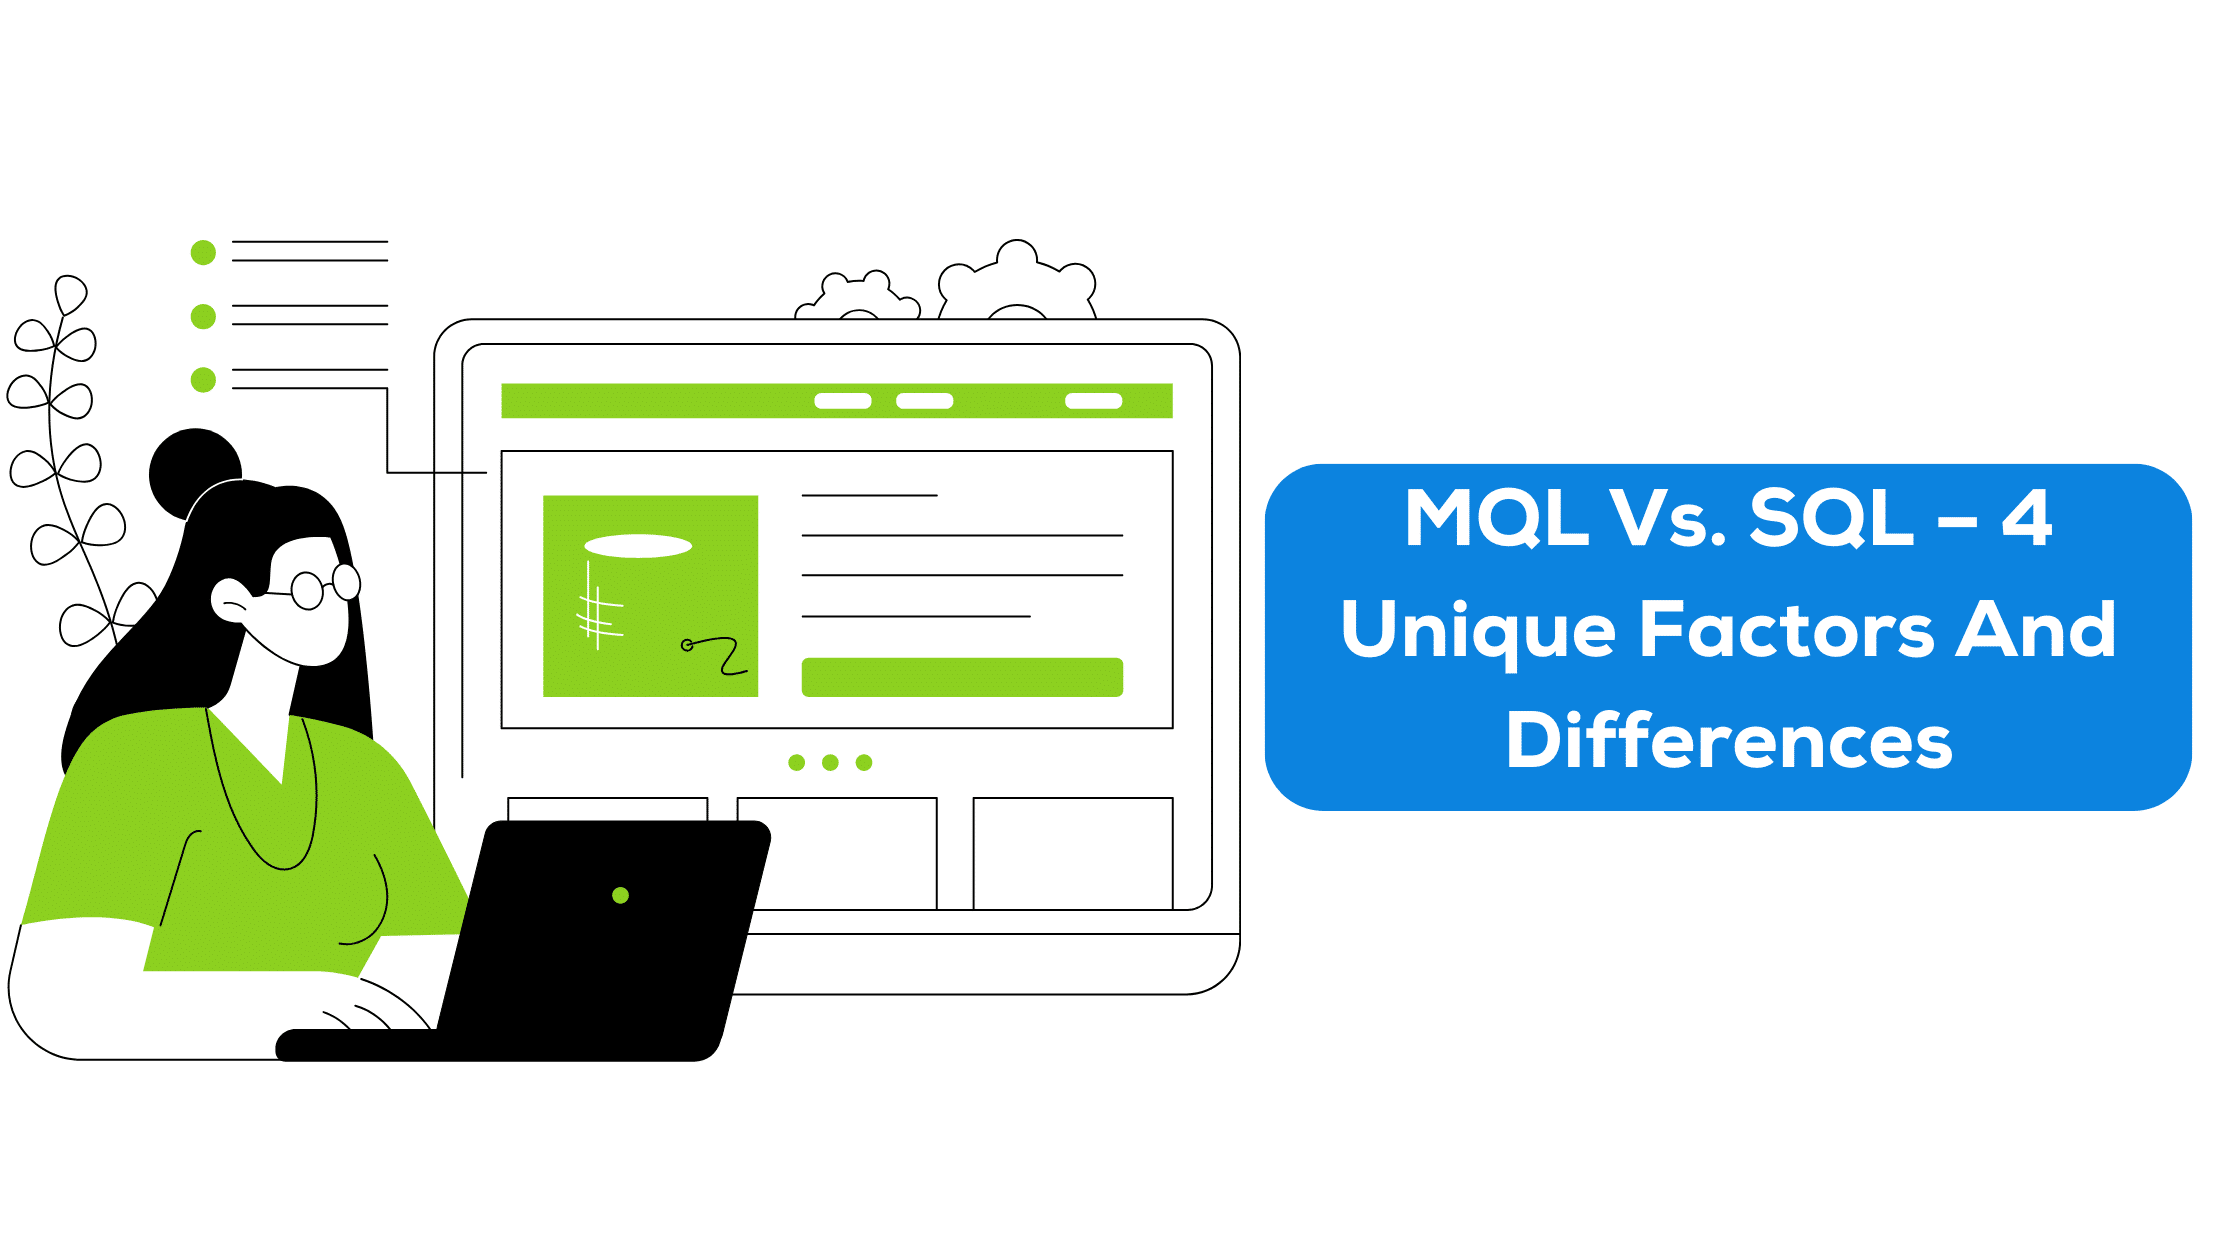 MQL Vs. SQL – 4 Unique Factors And Differences